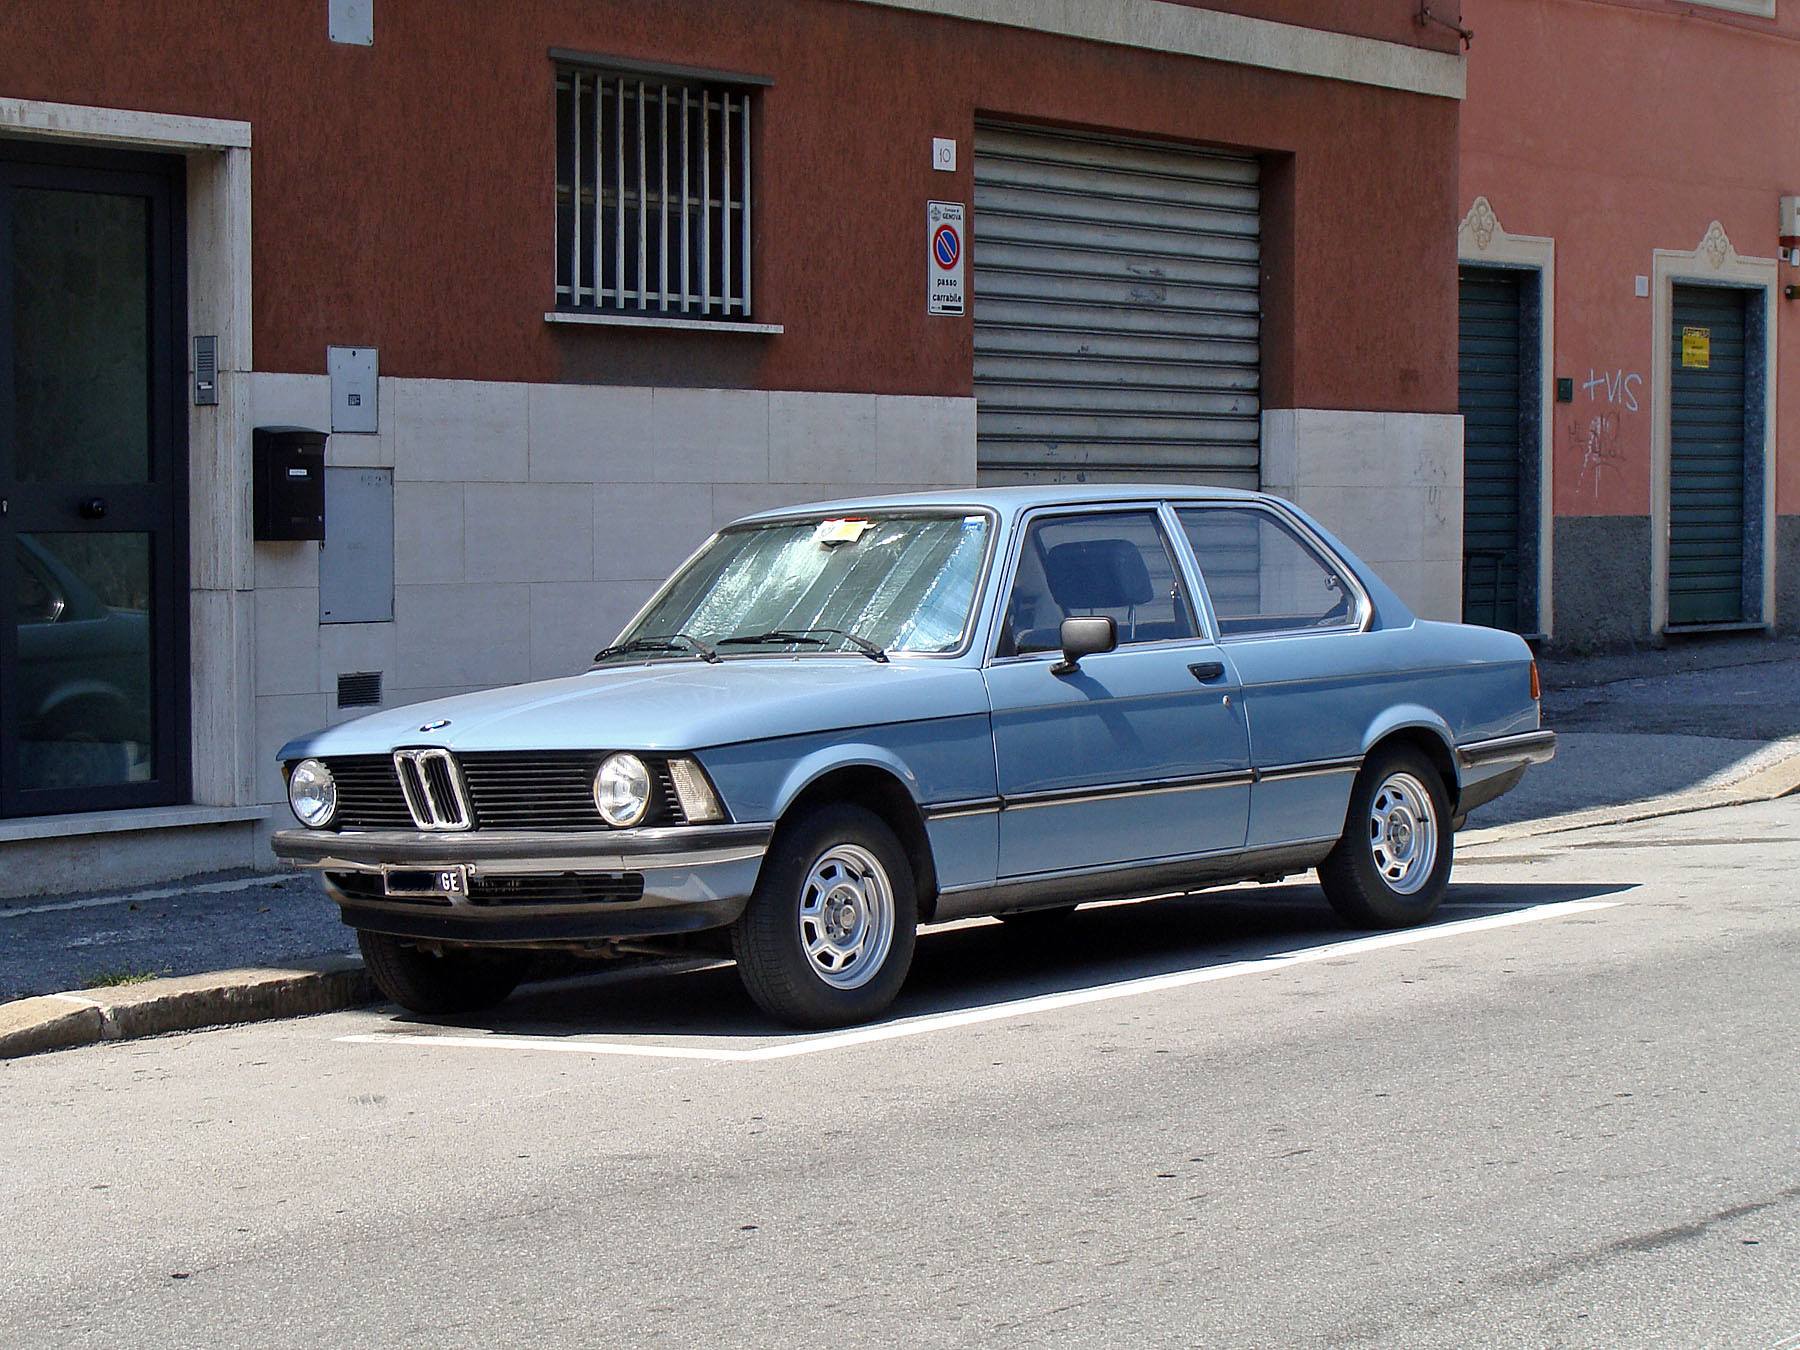 BMW 316 - 1977 | Flickr - Photo Sharing!